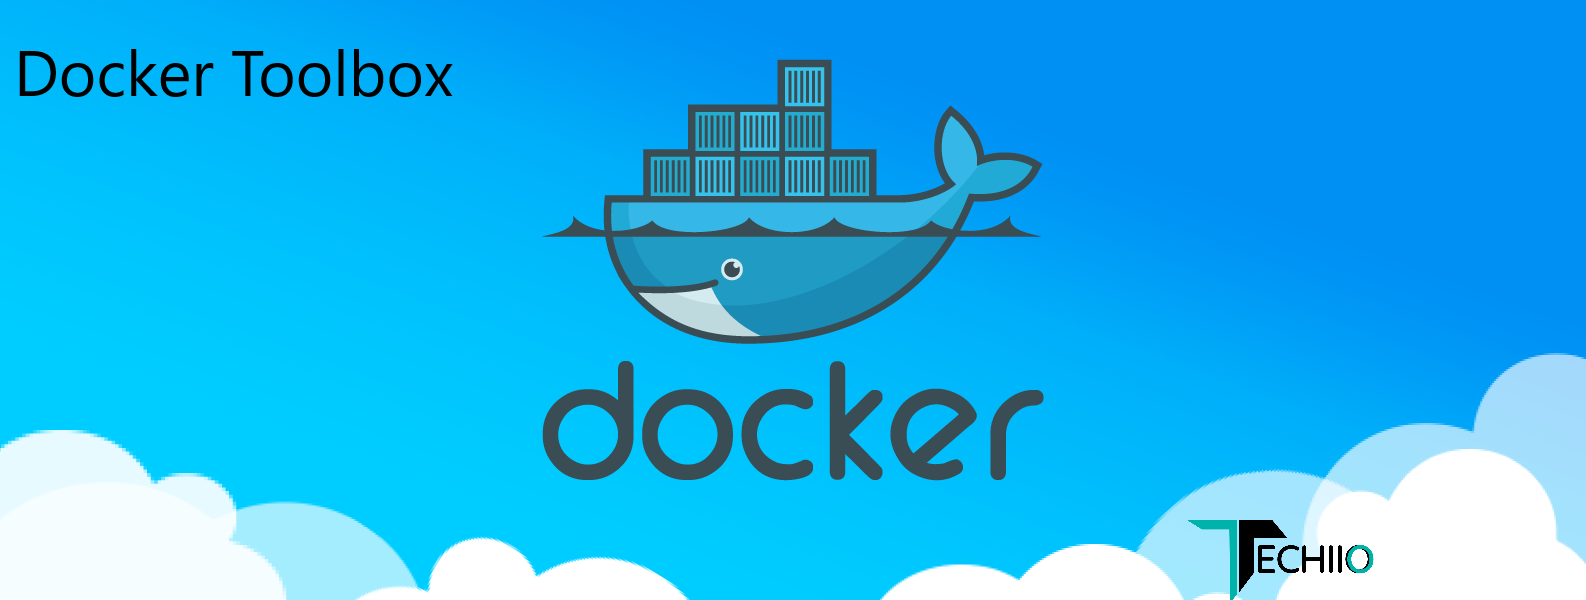 How to Install Docker Toolbox